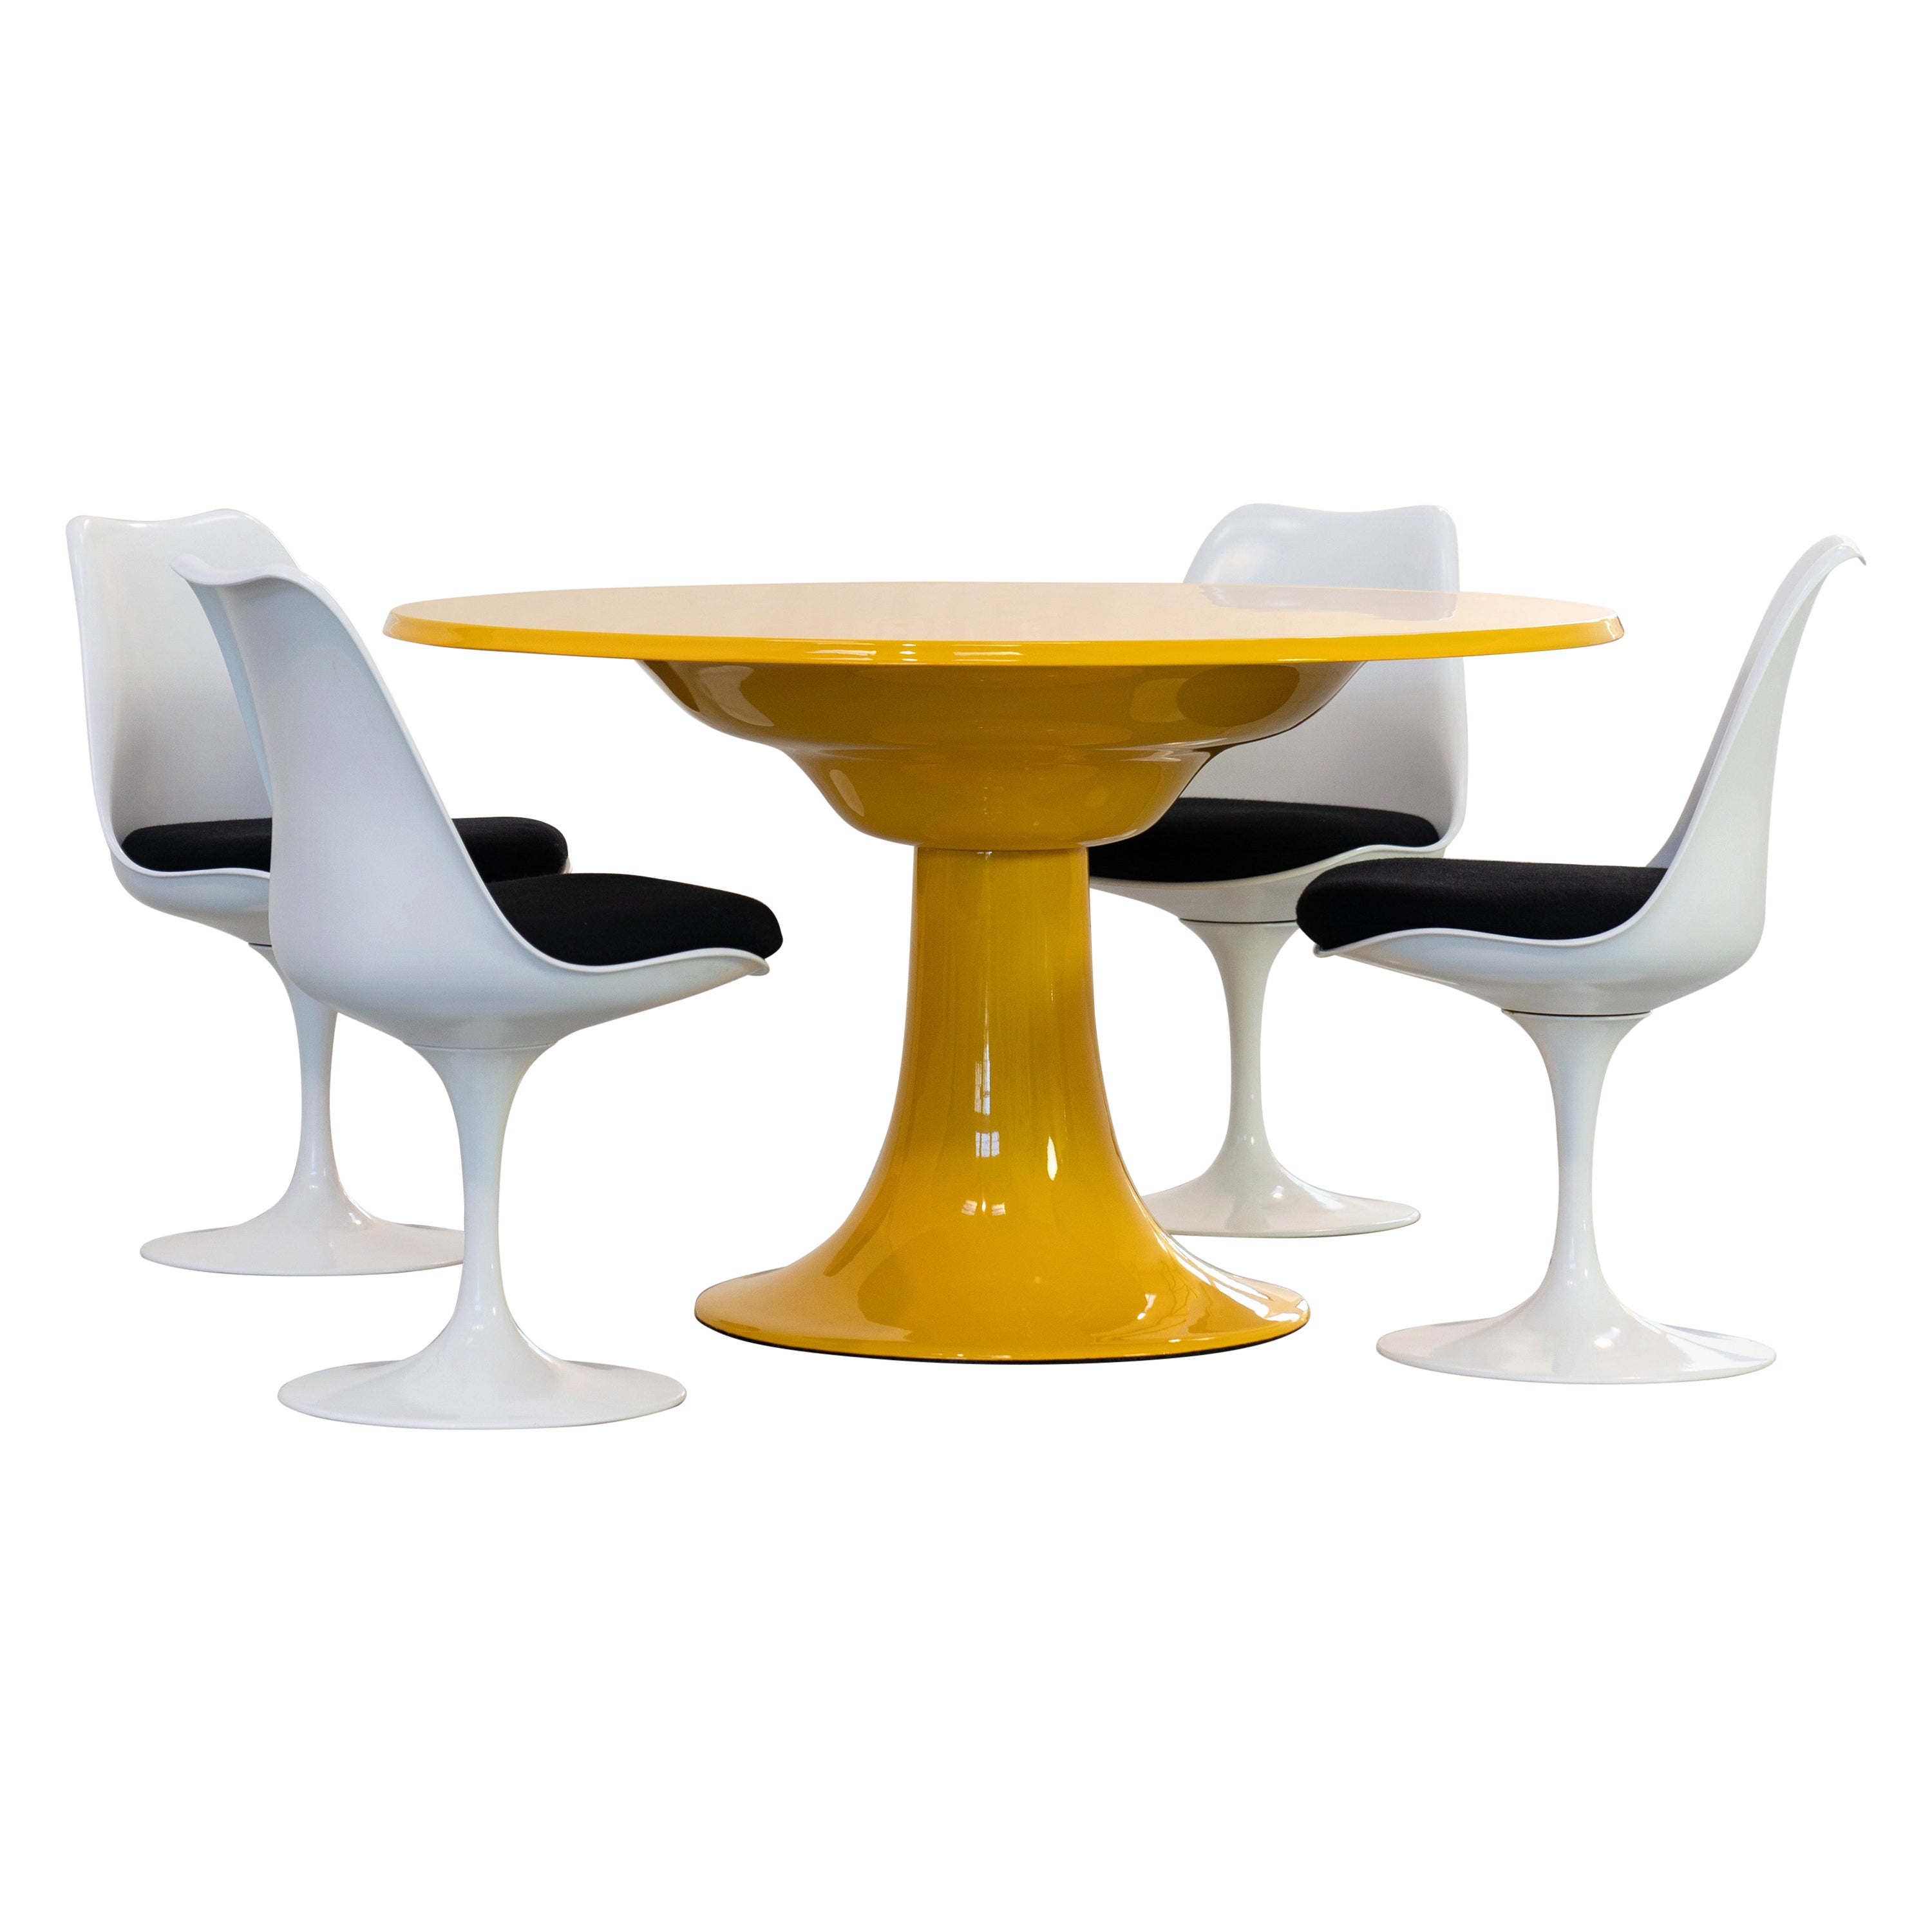 Otto Zapf Dining Table 1967 Zapfmöbel Germany Yolk Yellow Mid Century Modern For Sale